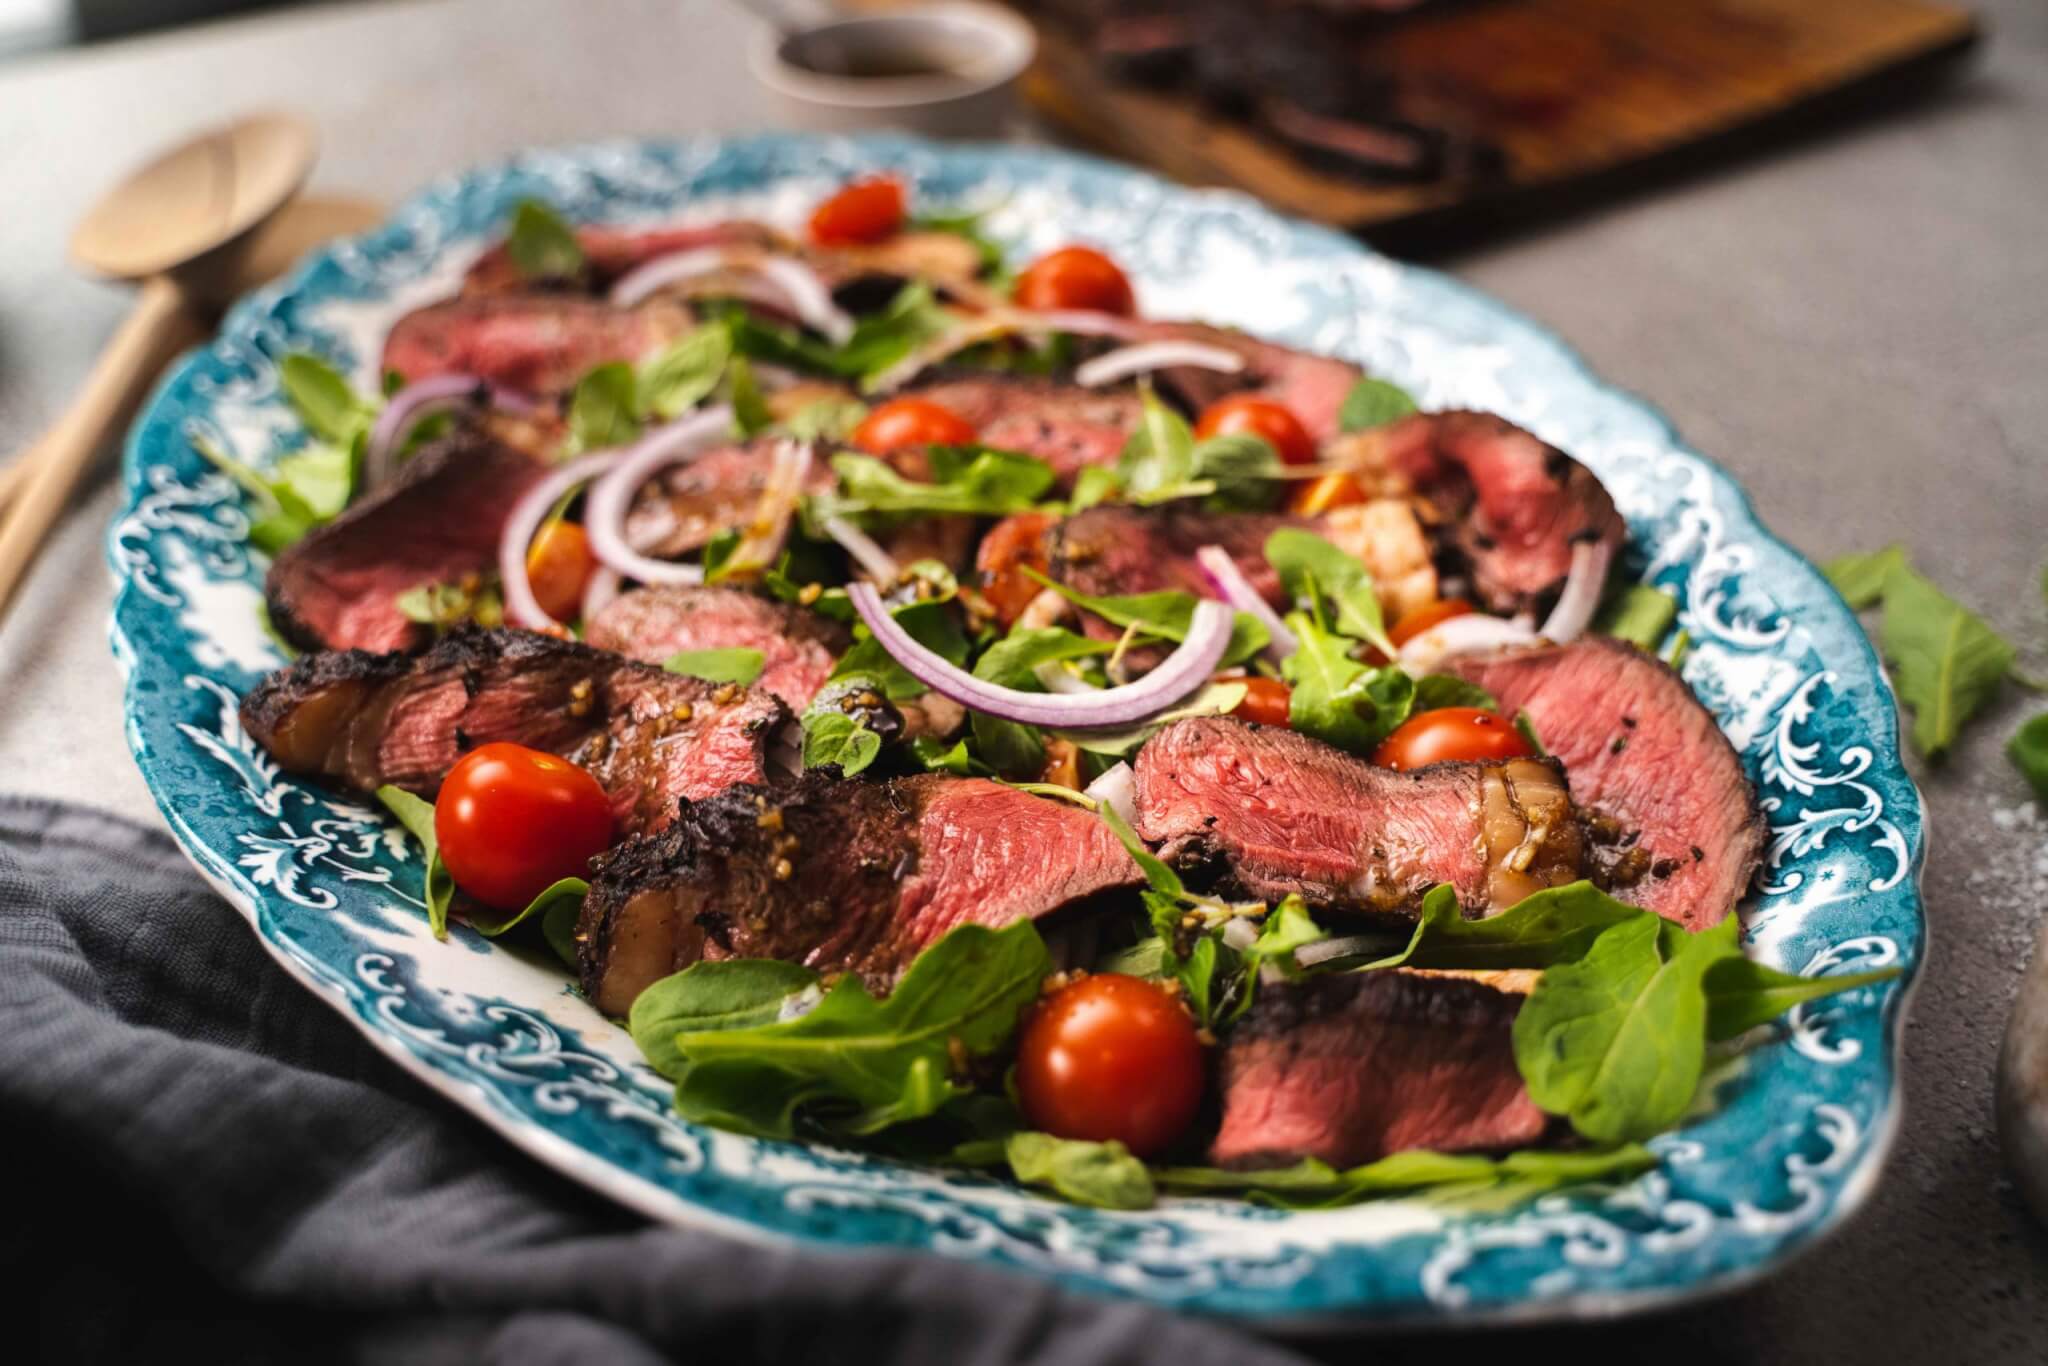 Beef Steak Tagliata with Rocket Salad - Superb Herb